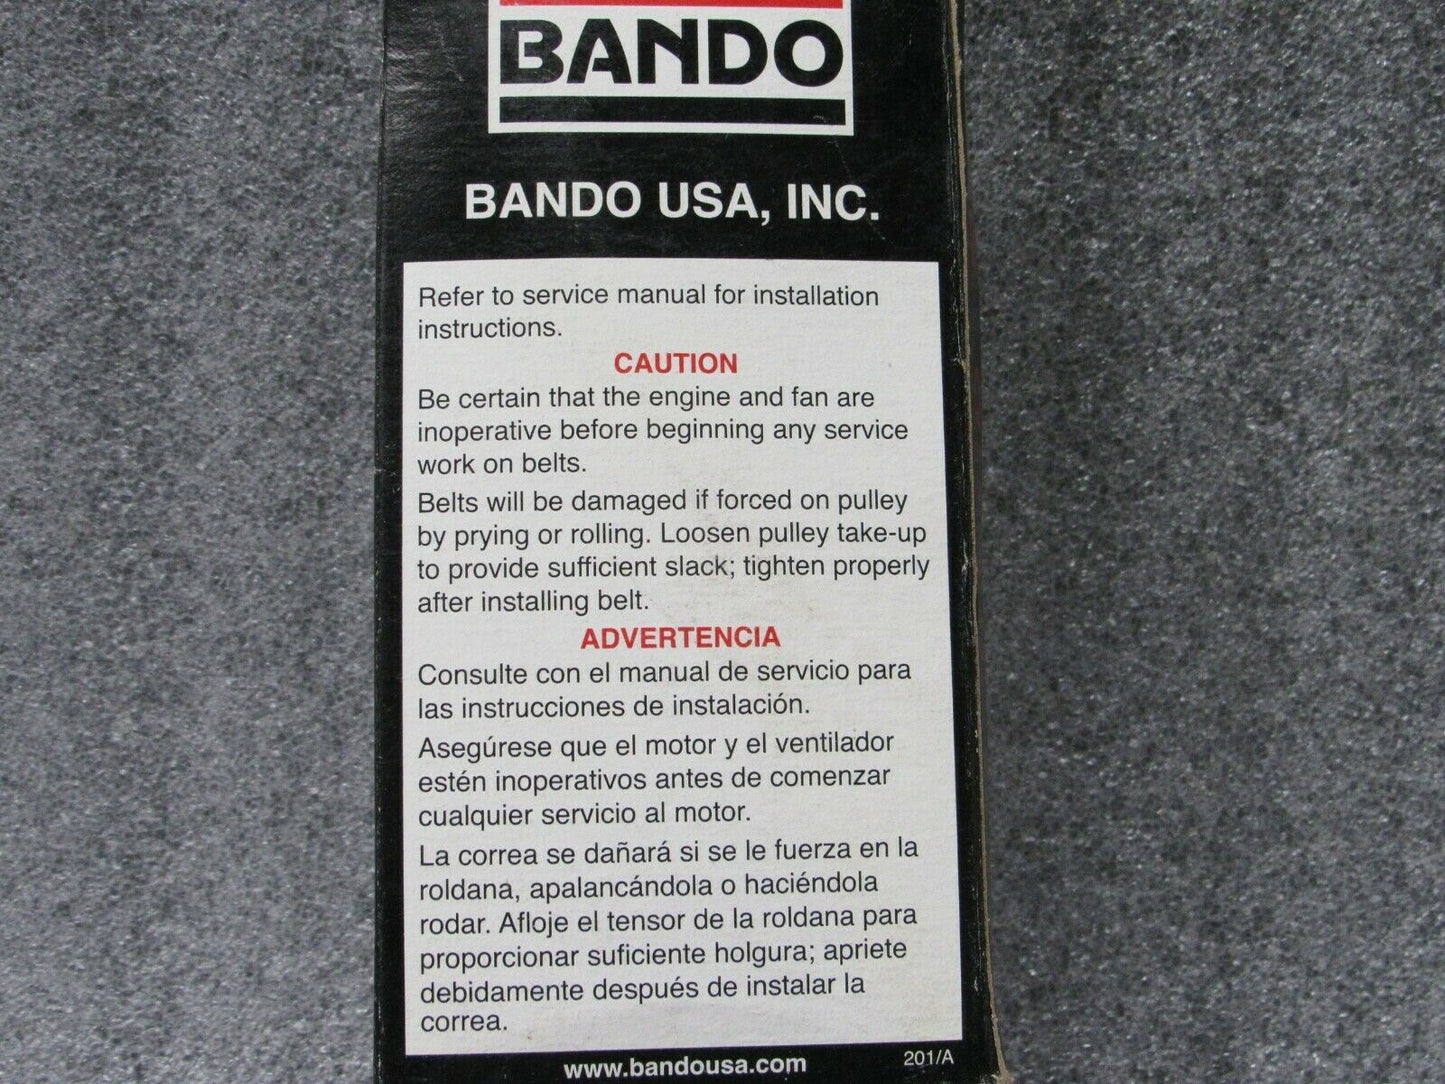 BANDO Auto V-Belt, 65", Industry Number RPF2650 (184158693677-WTA06)